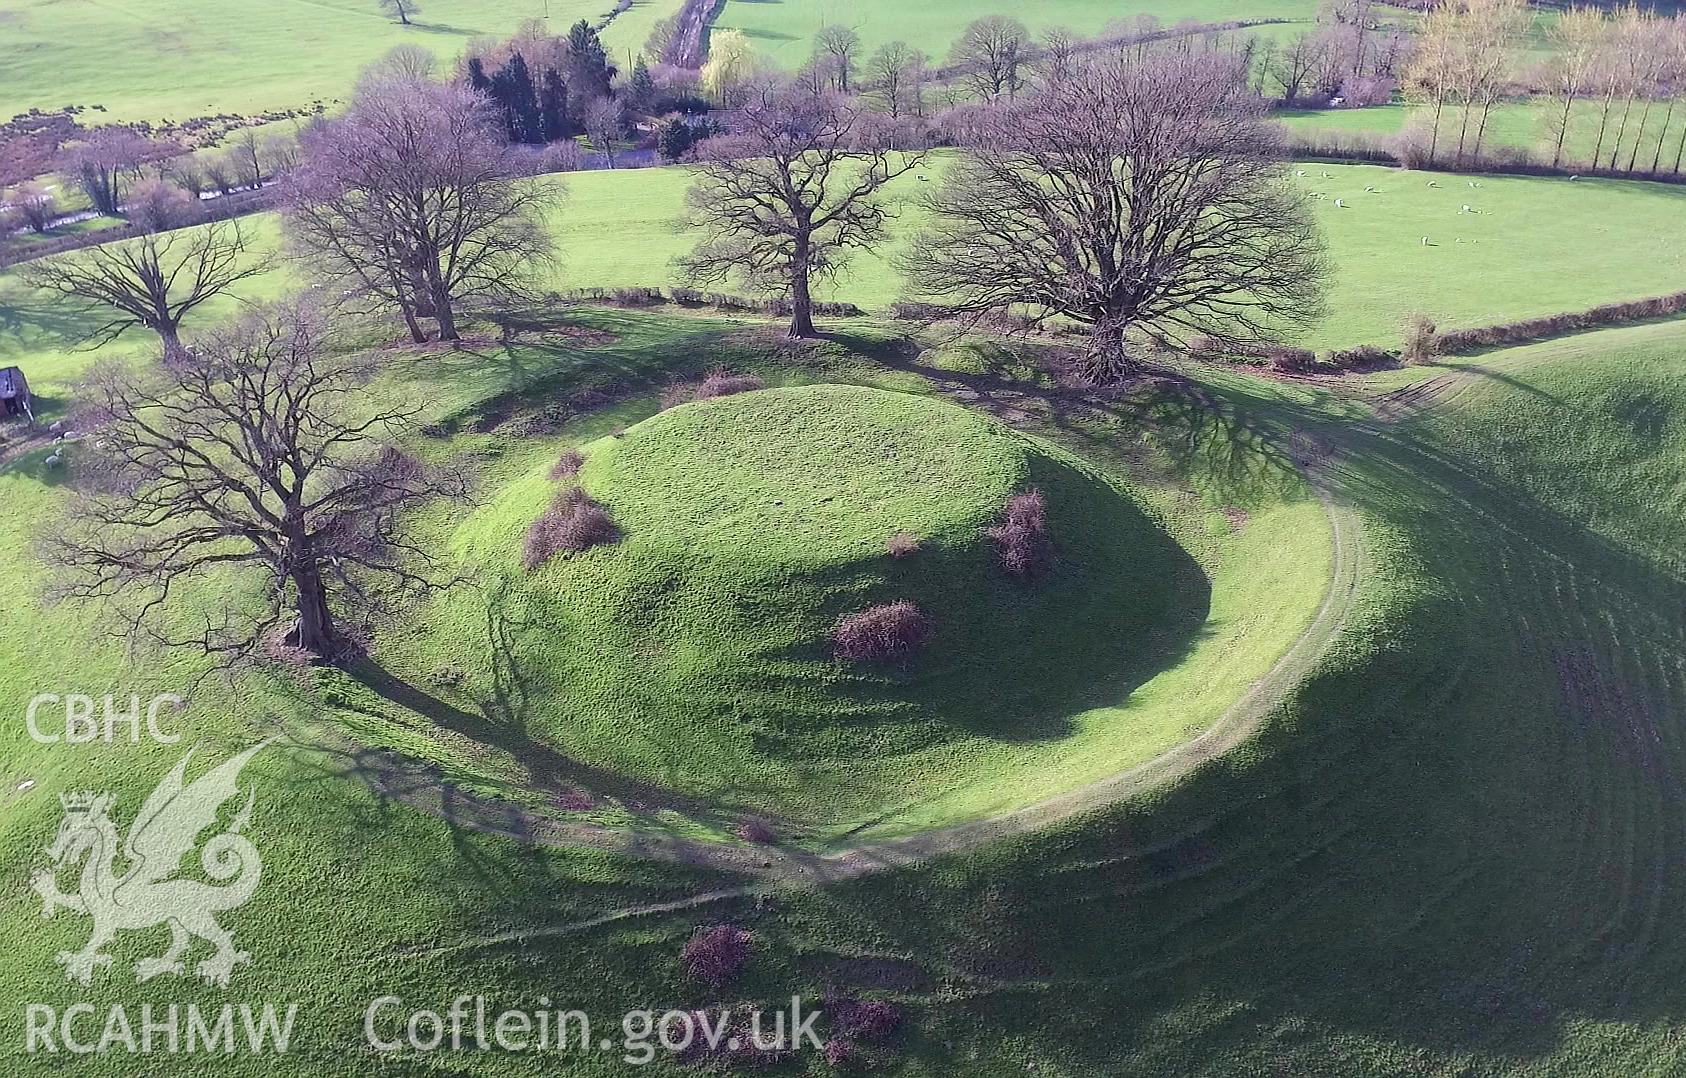 Colour photo showing Sycharth Castle, produced by Paul R. Davis,  April 2017.